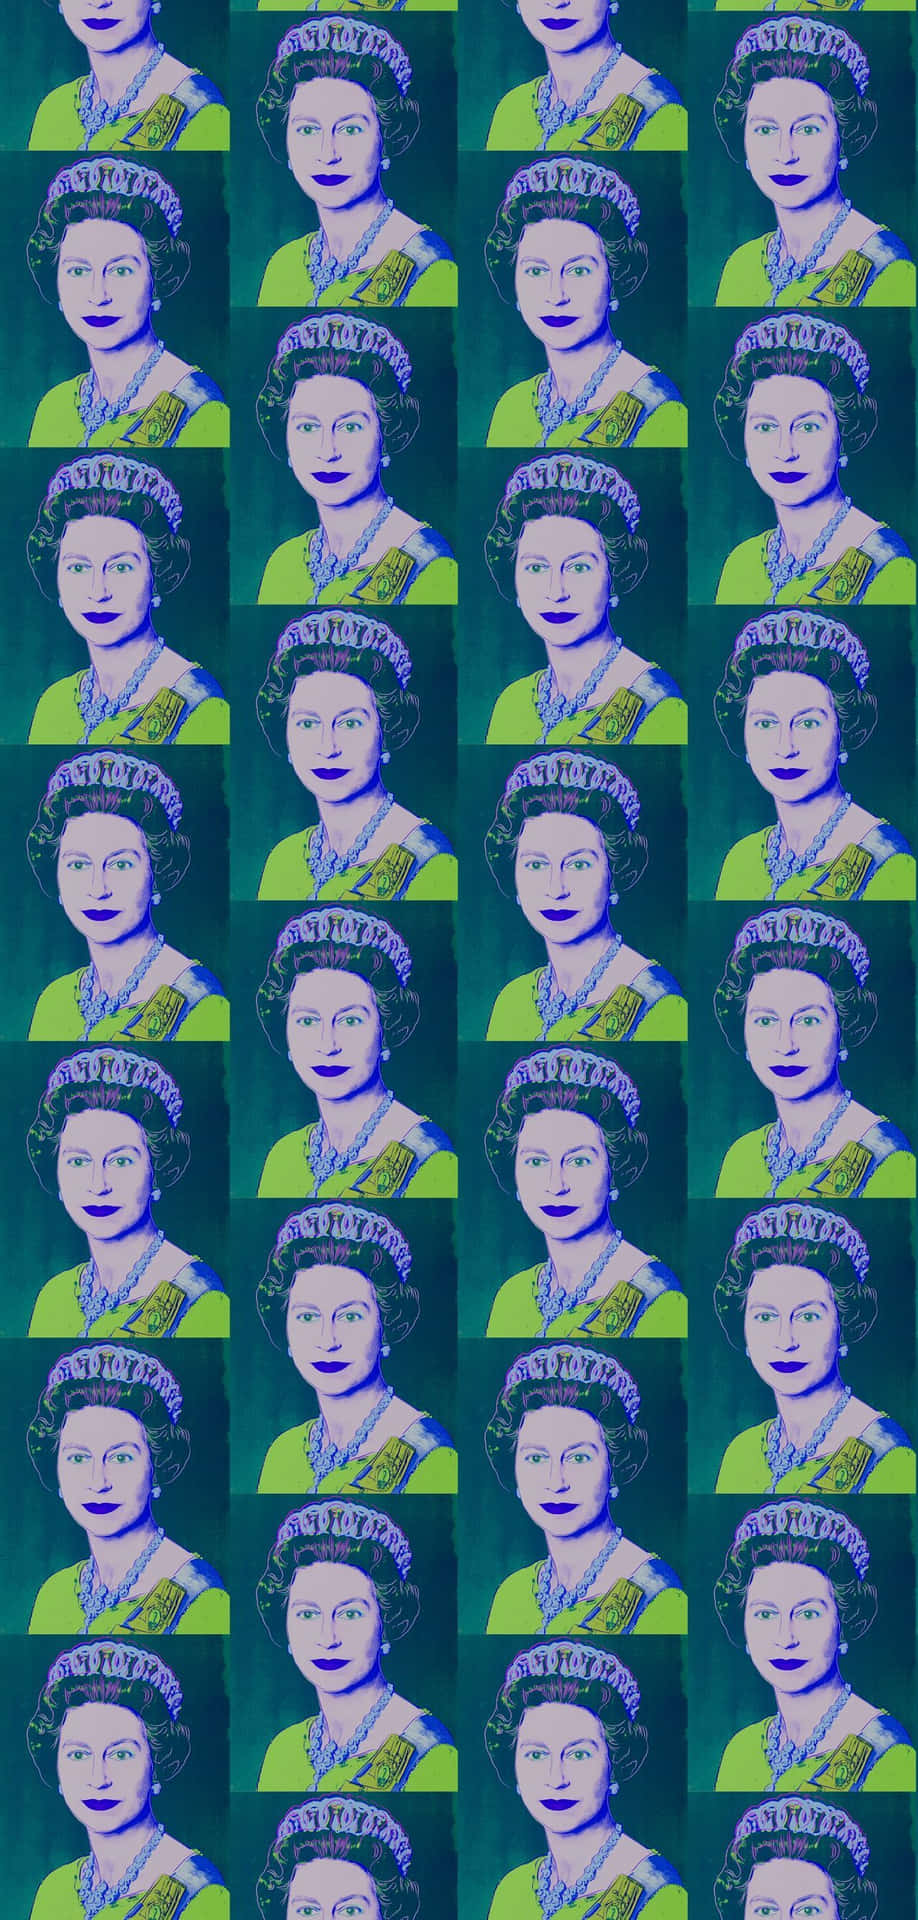 Caption: Queen Elizabeth Ii: A Timeless Icon